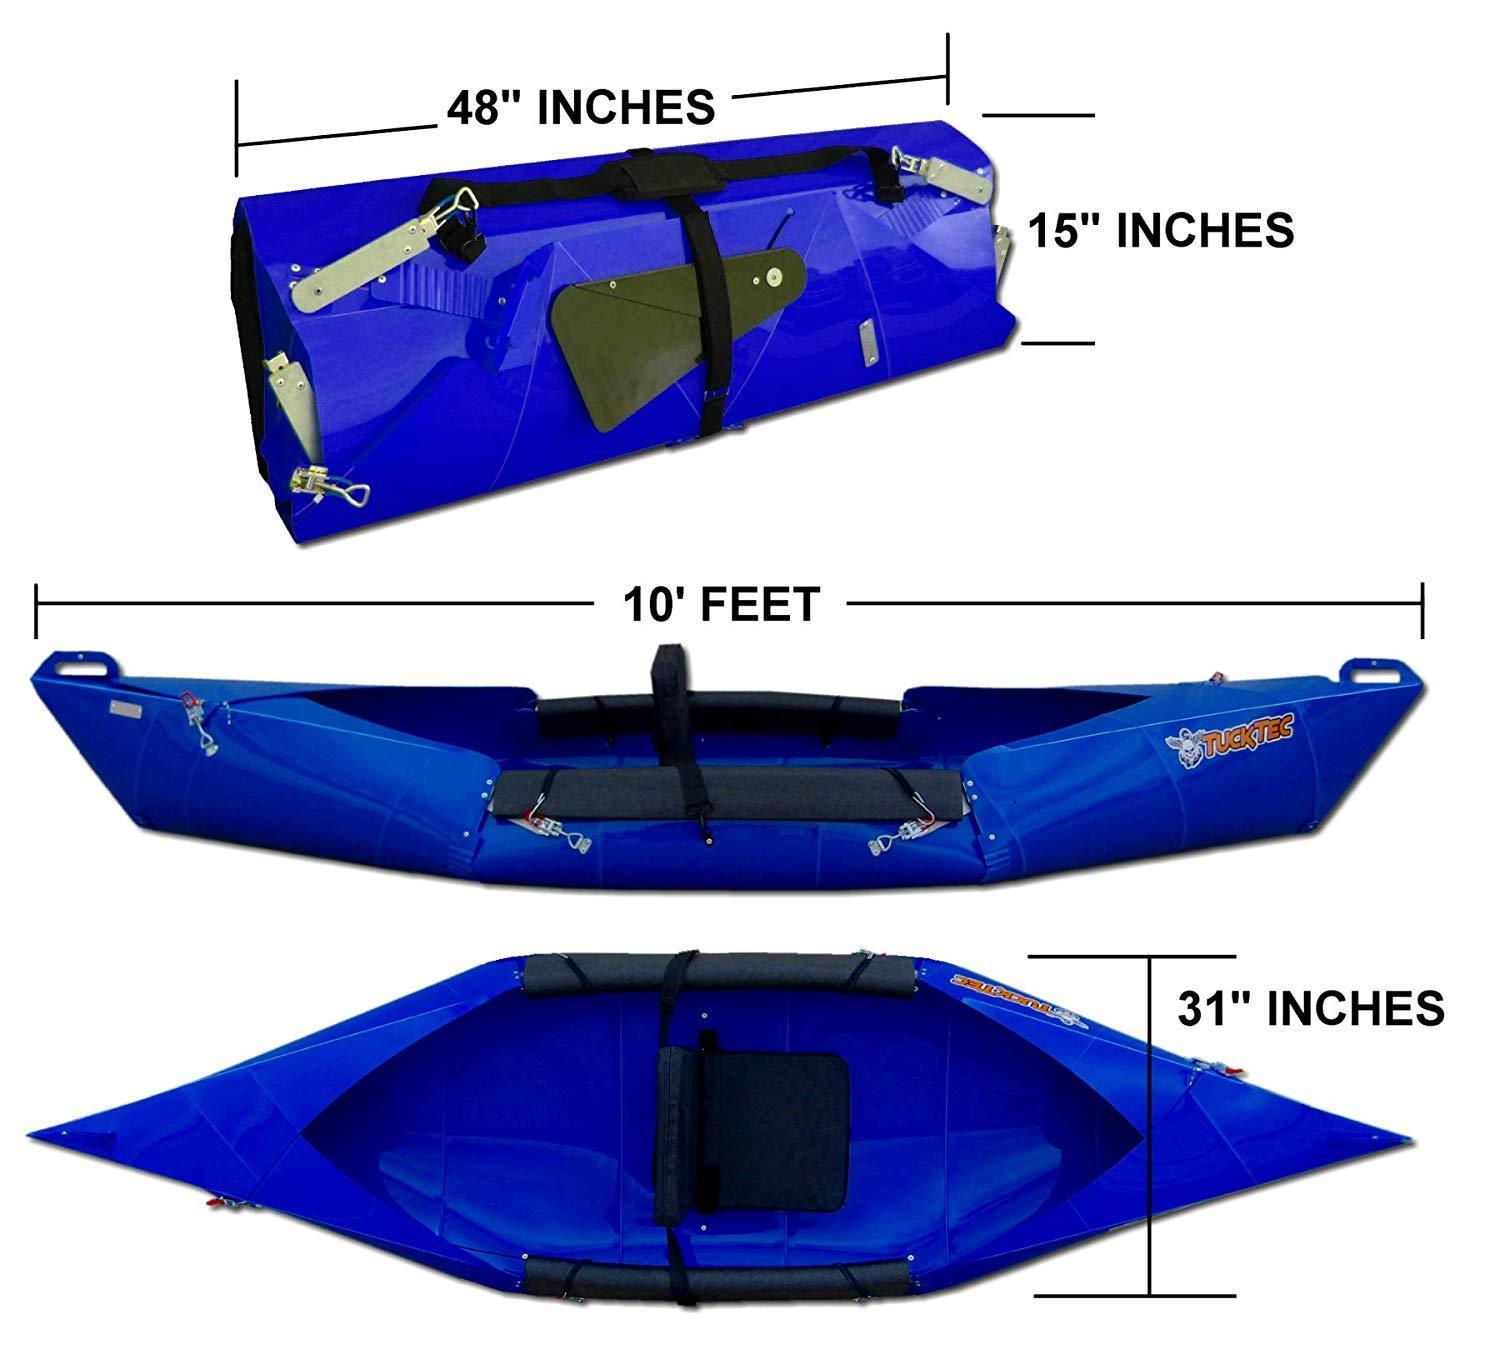 Tucktec, Tucktec Advanced 2020 Model 10 Ft Foldable Kayak Portable Lightweight Canoe Green New